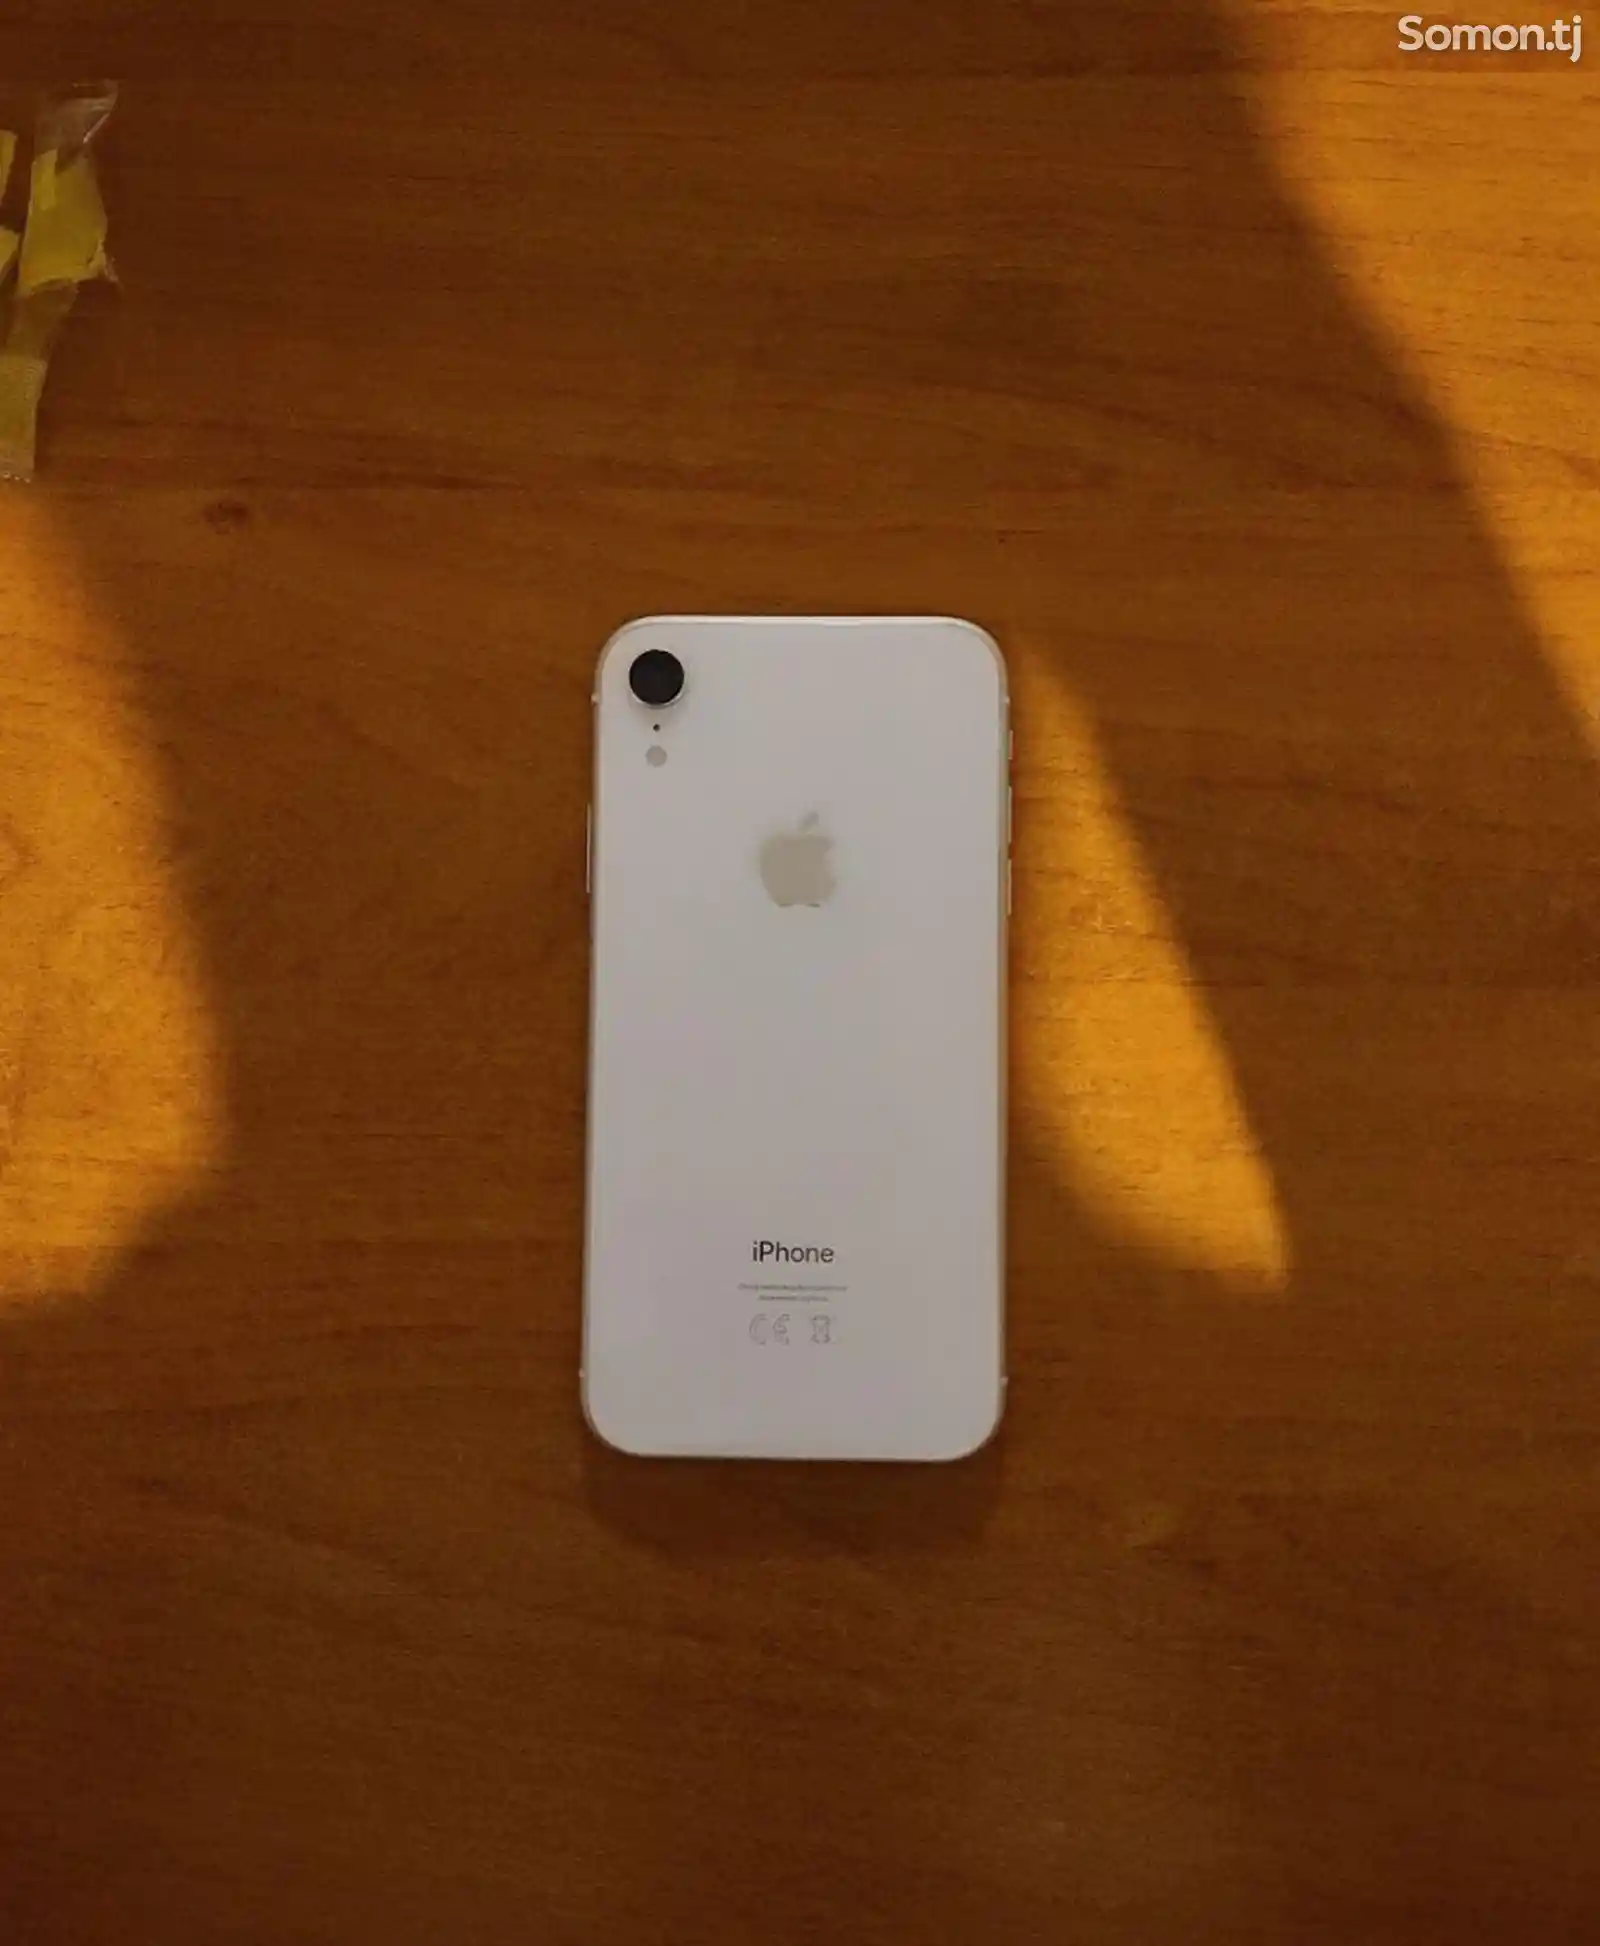 Apple iPhone Xr, 64 gb, White